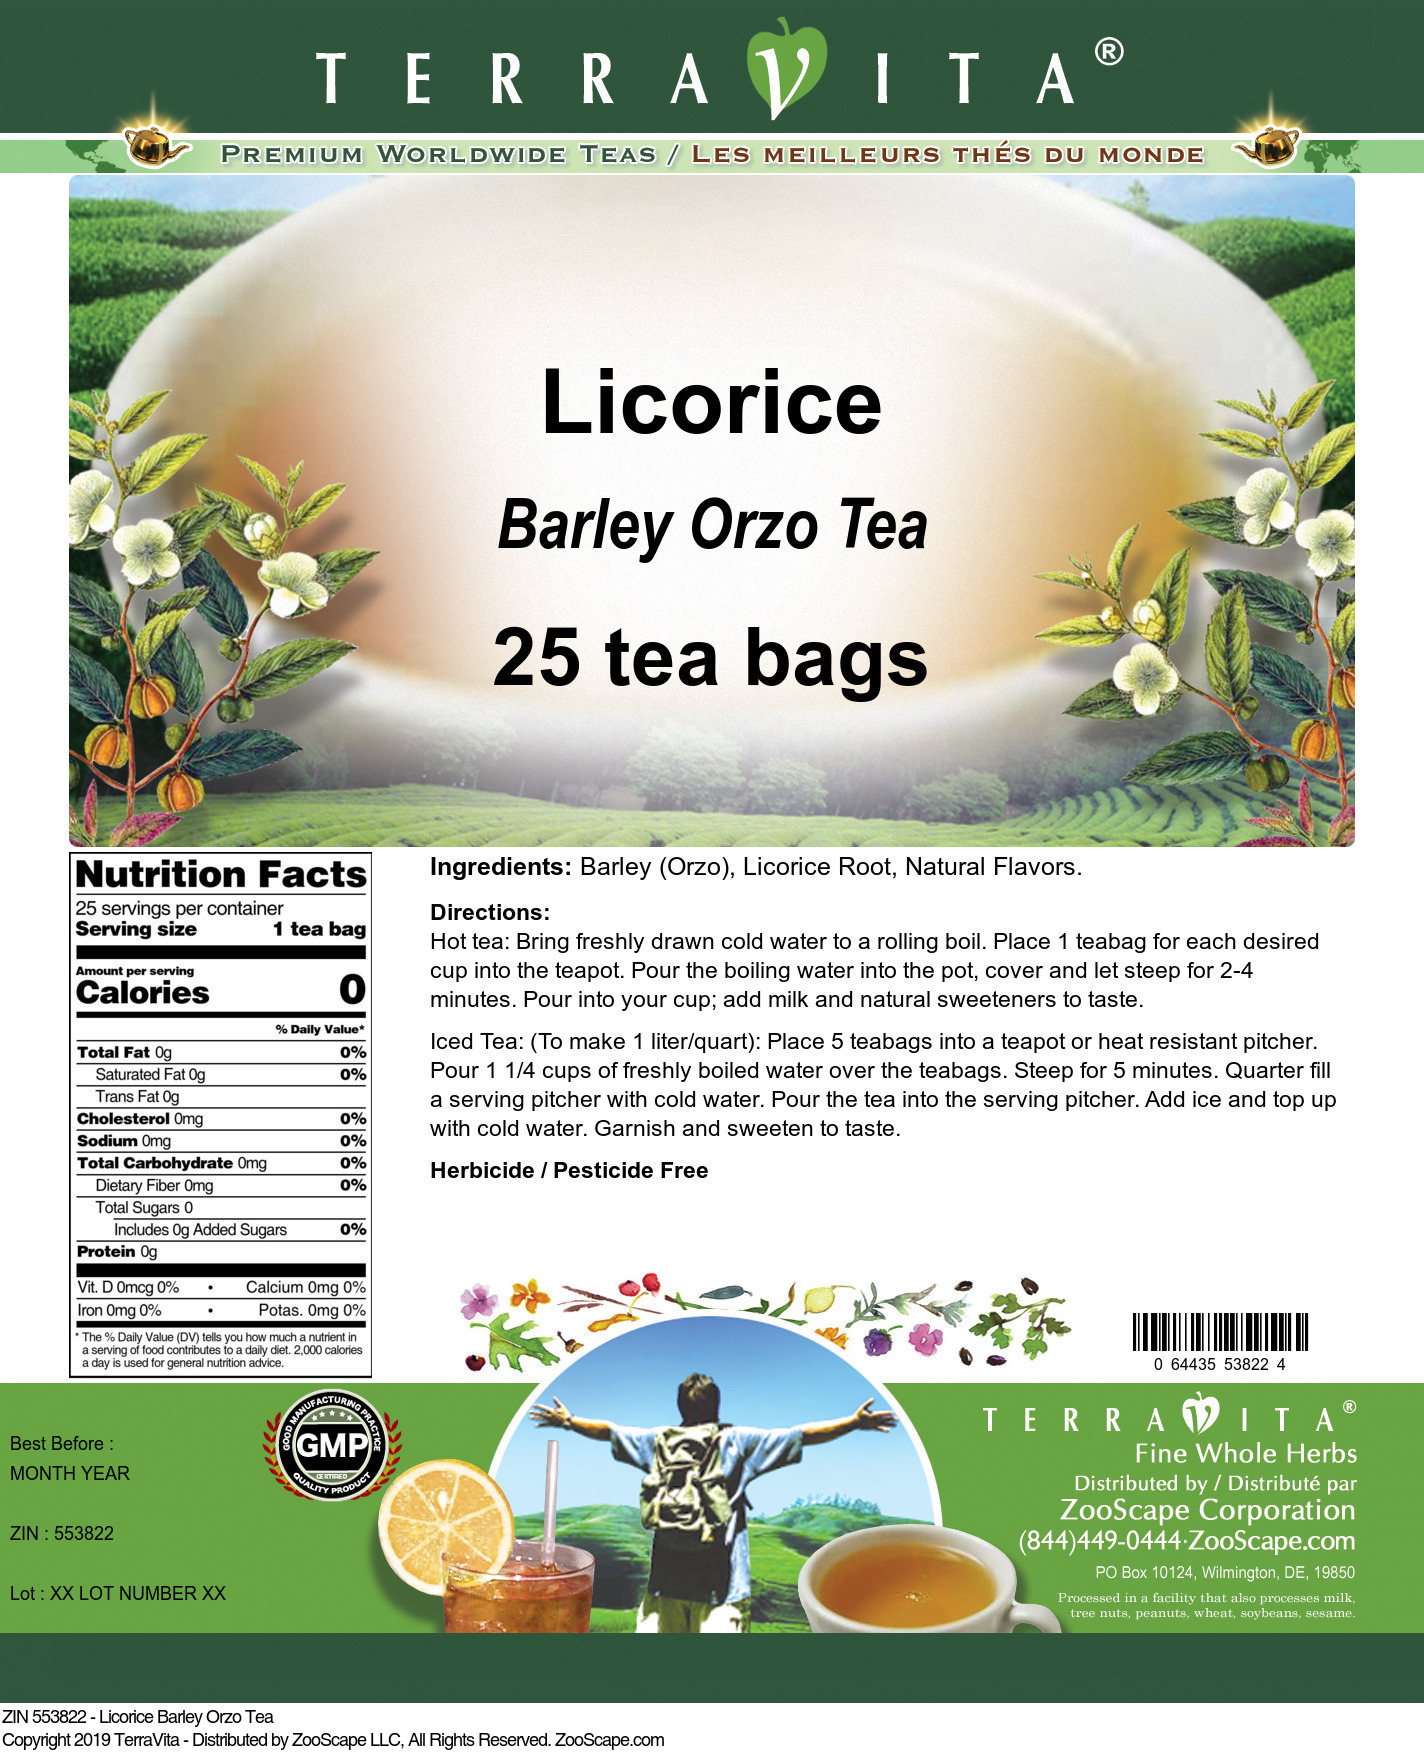 Licorice Barley Orzo Tea - Label